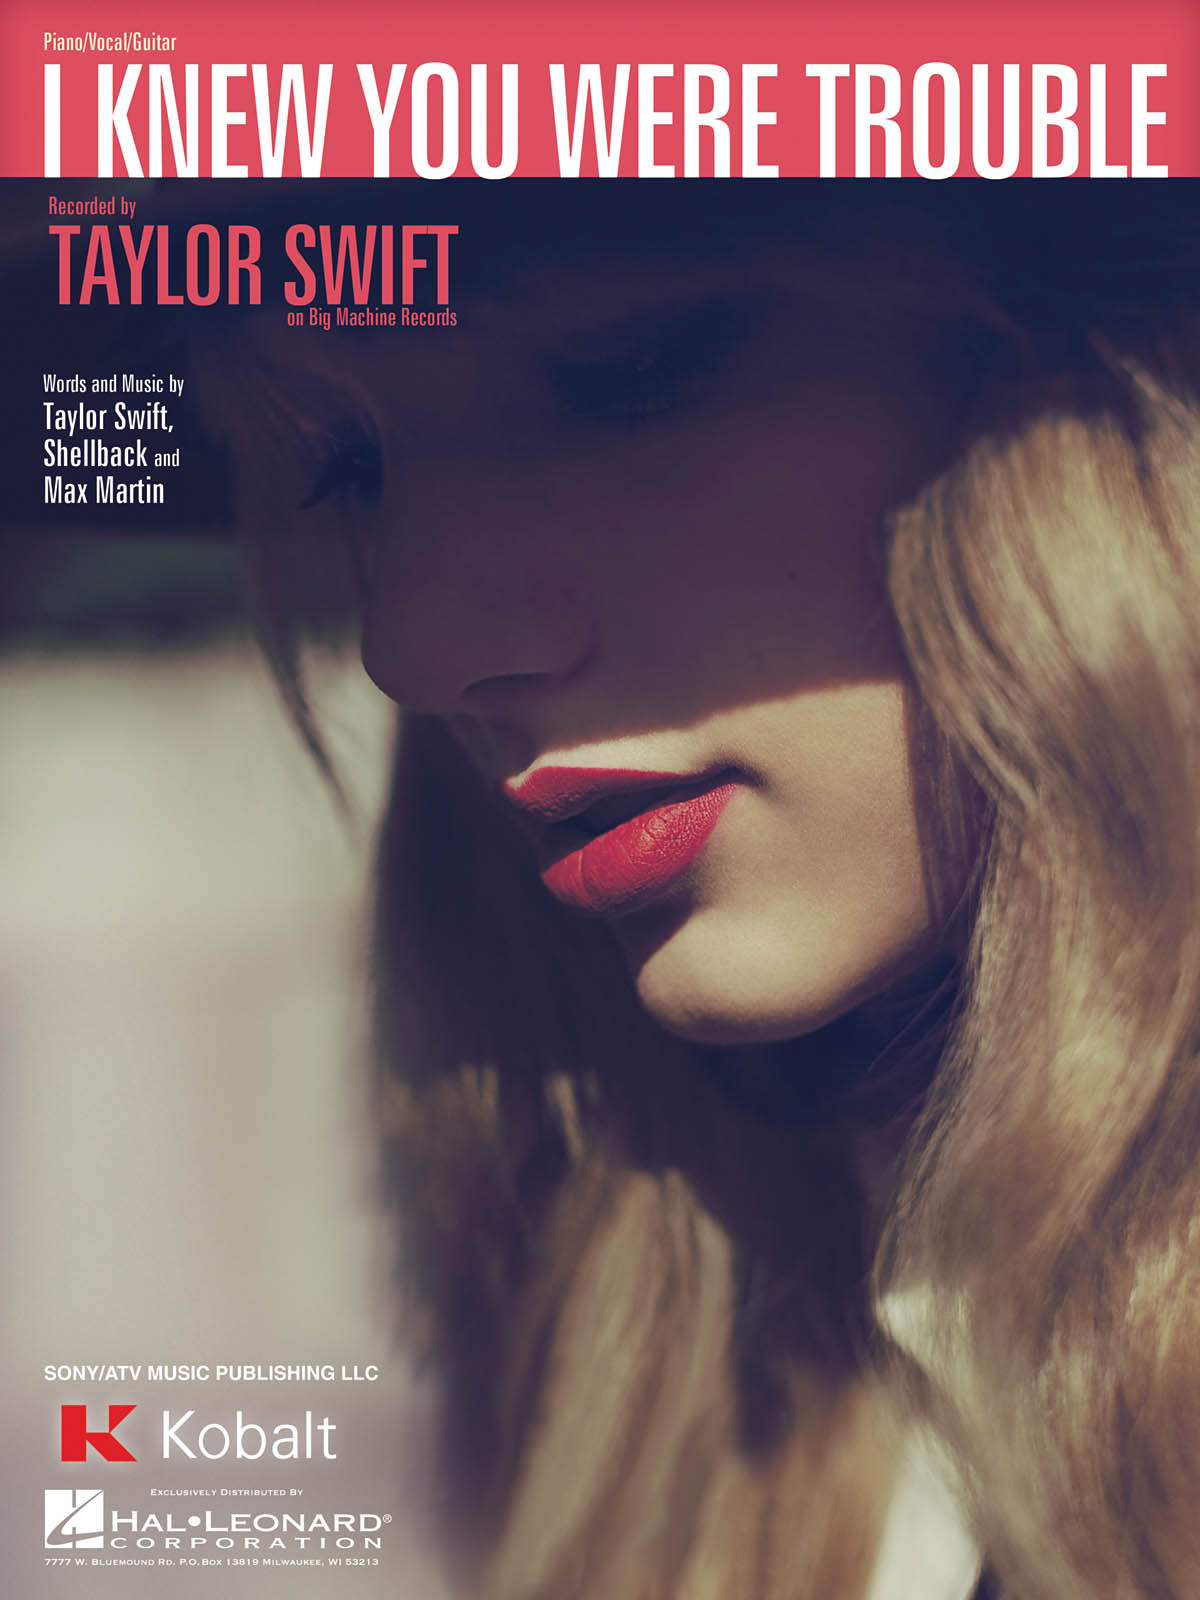 Тейлор свифт trouble. Taylor Swift i knew you were Trouble. Taylor Swift i knew you were Trouble обложка. I knew you were Trouble.